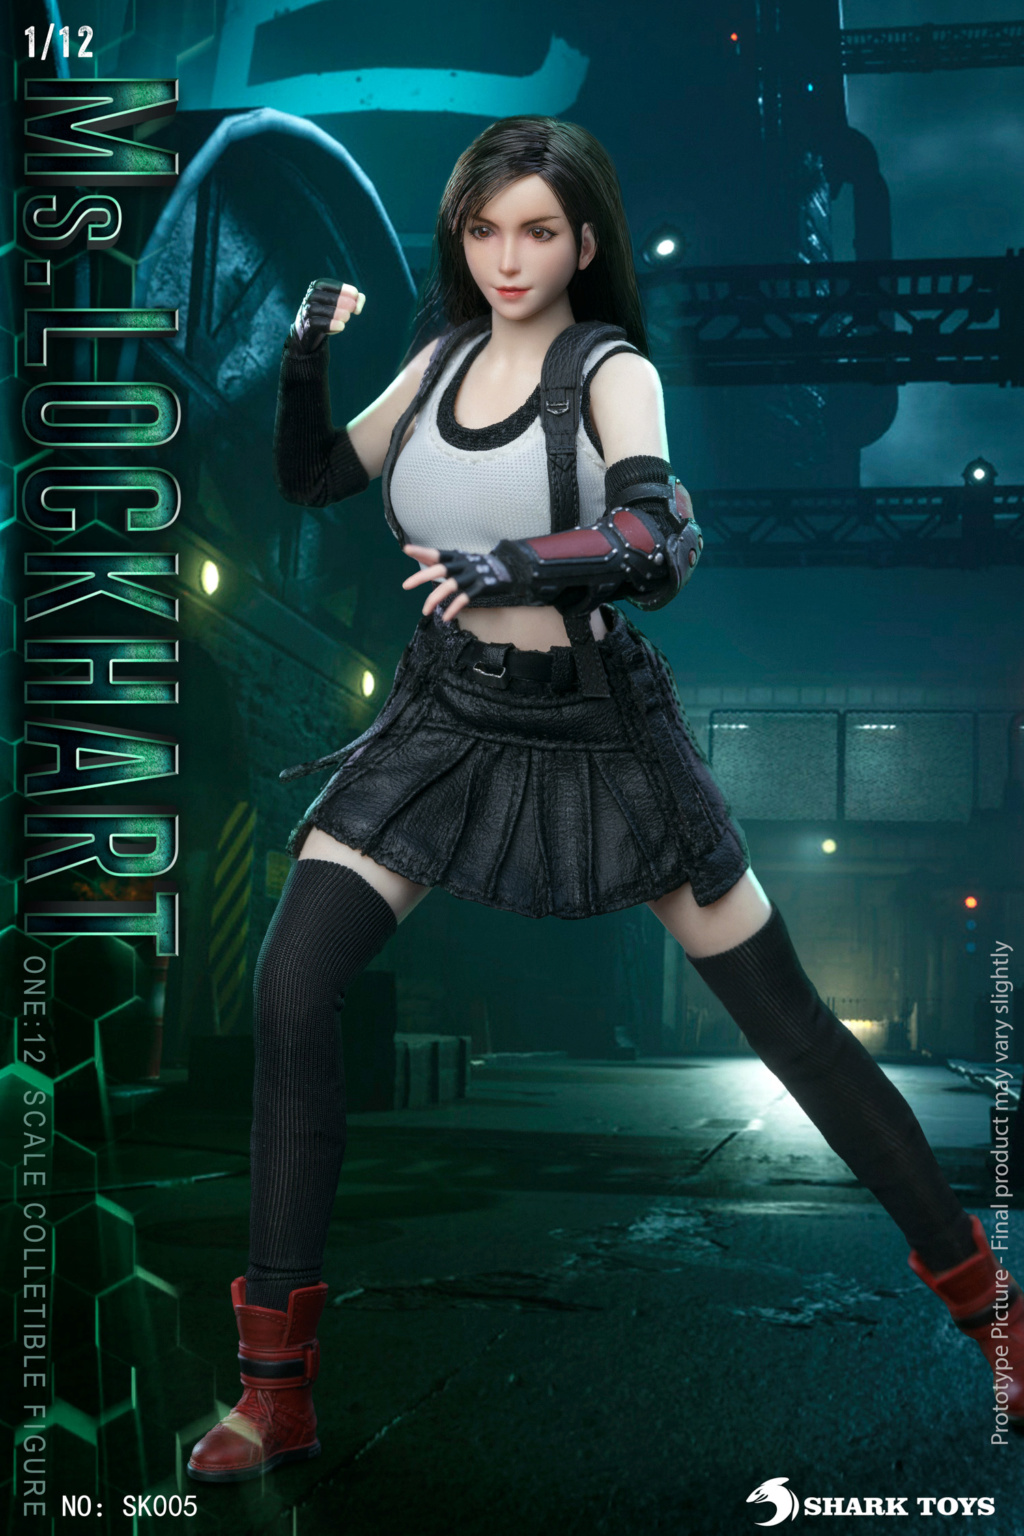 VideoGame-Based - NEW PRODUCT: SharkToys: SK005 1/12 Scale Fantasy Female Warrior 1440